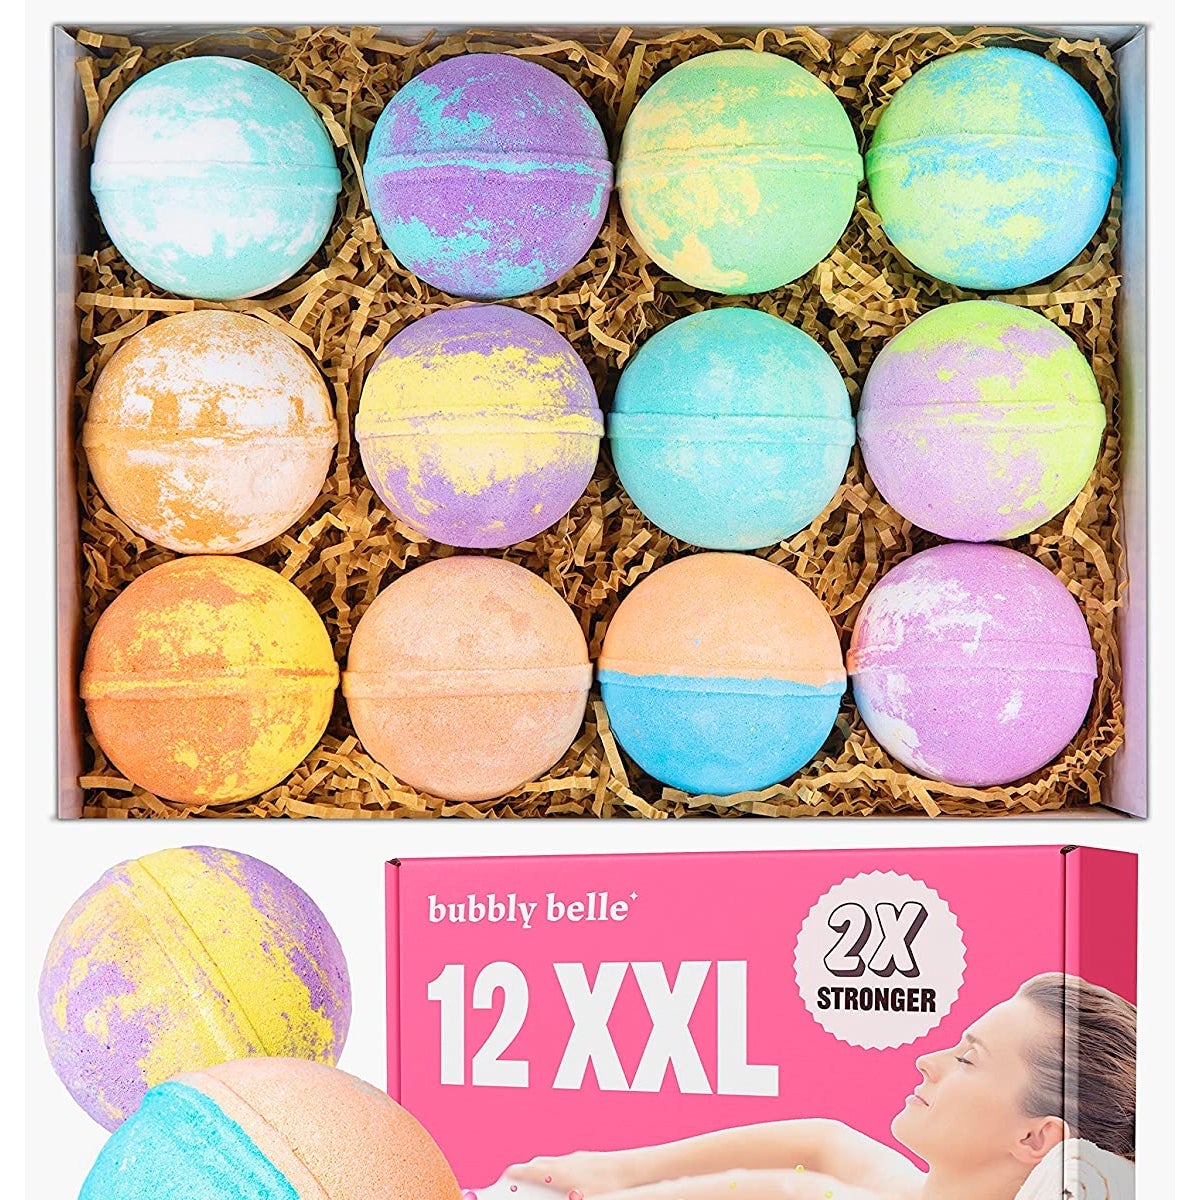 Box of 12 multicolored bath bombs